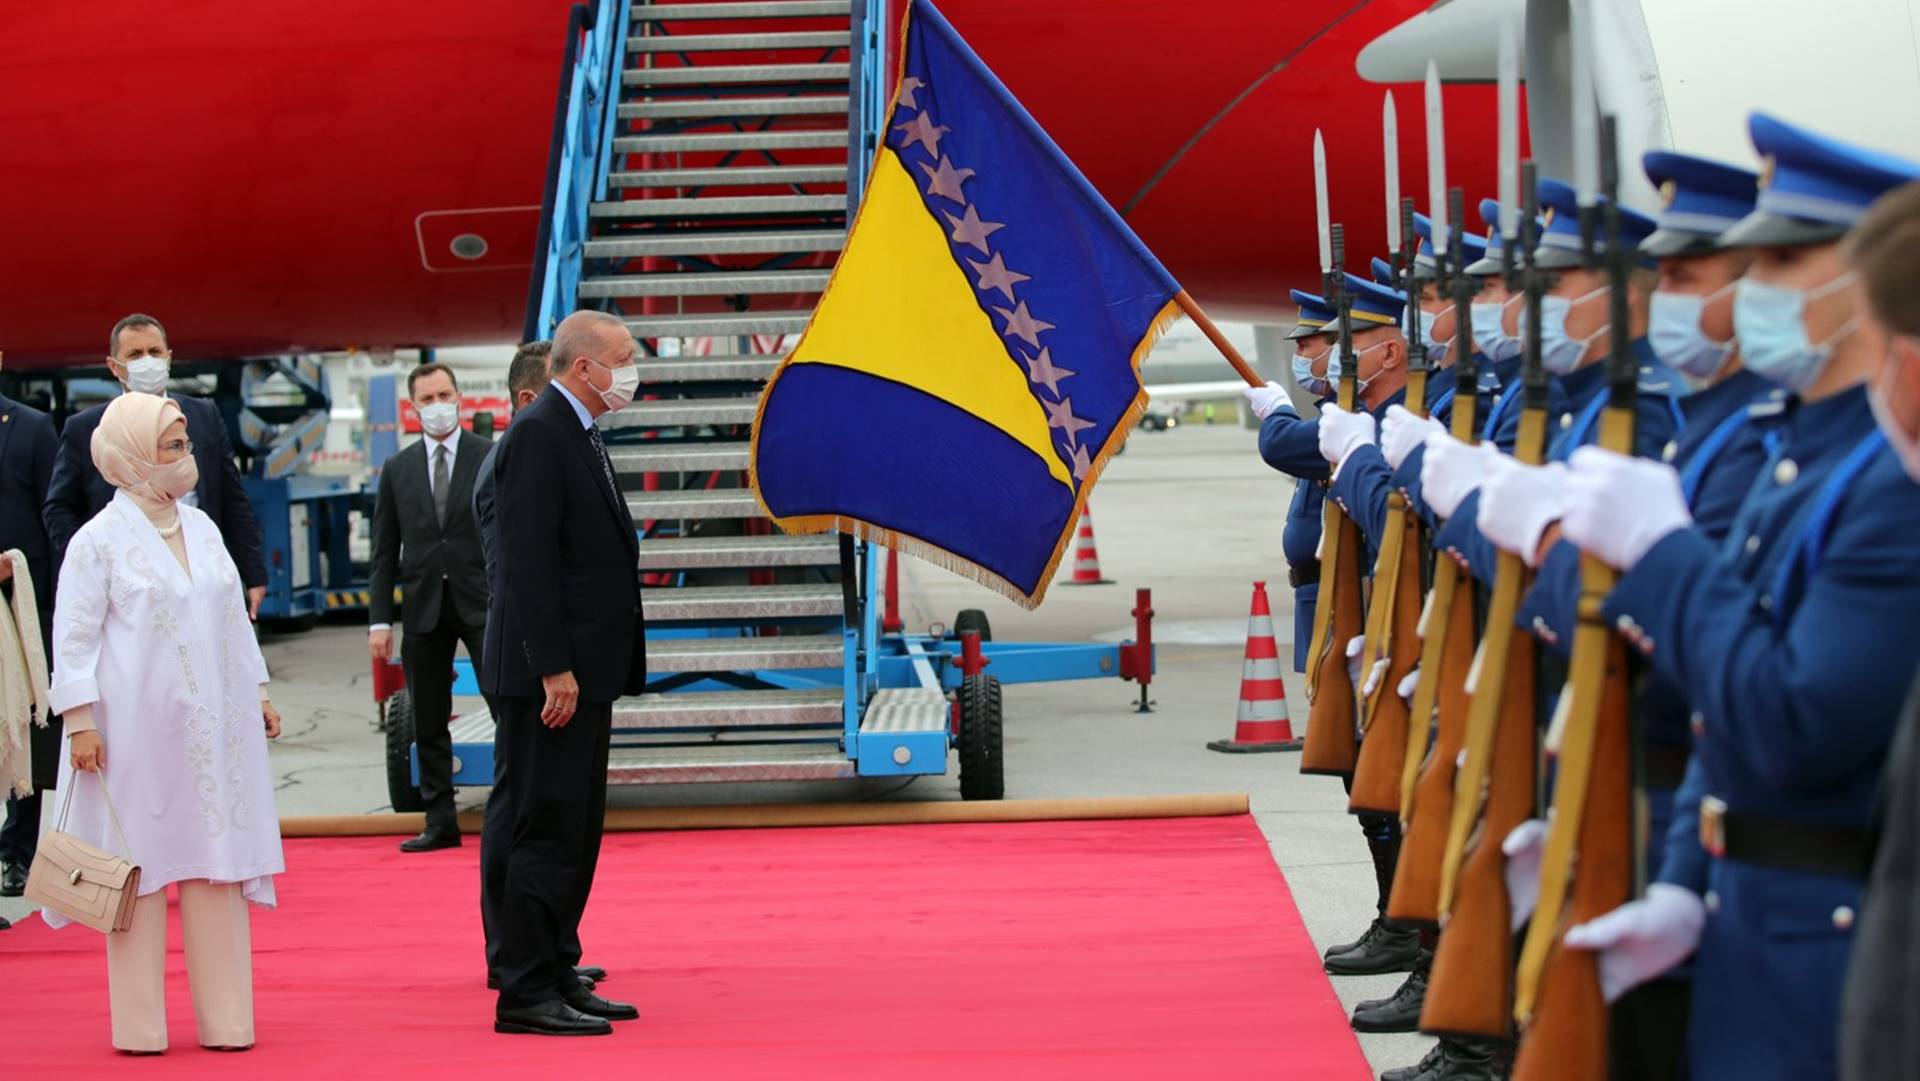 Erdoğan arrives in Bosnia as part of the mini-Balkans tour